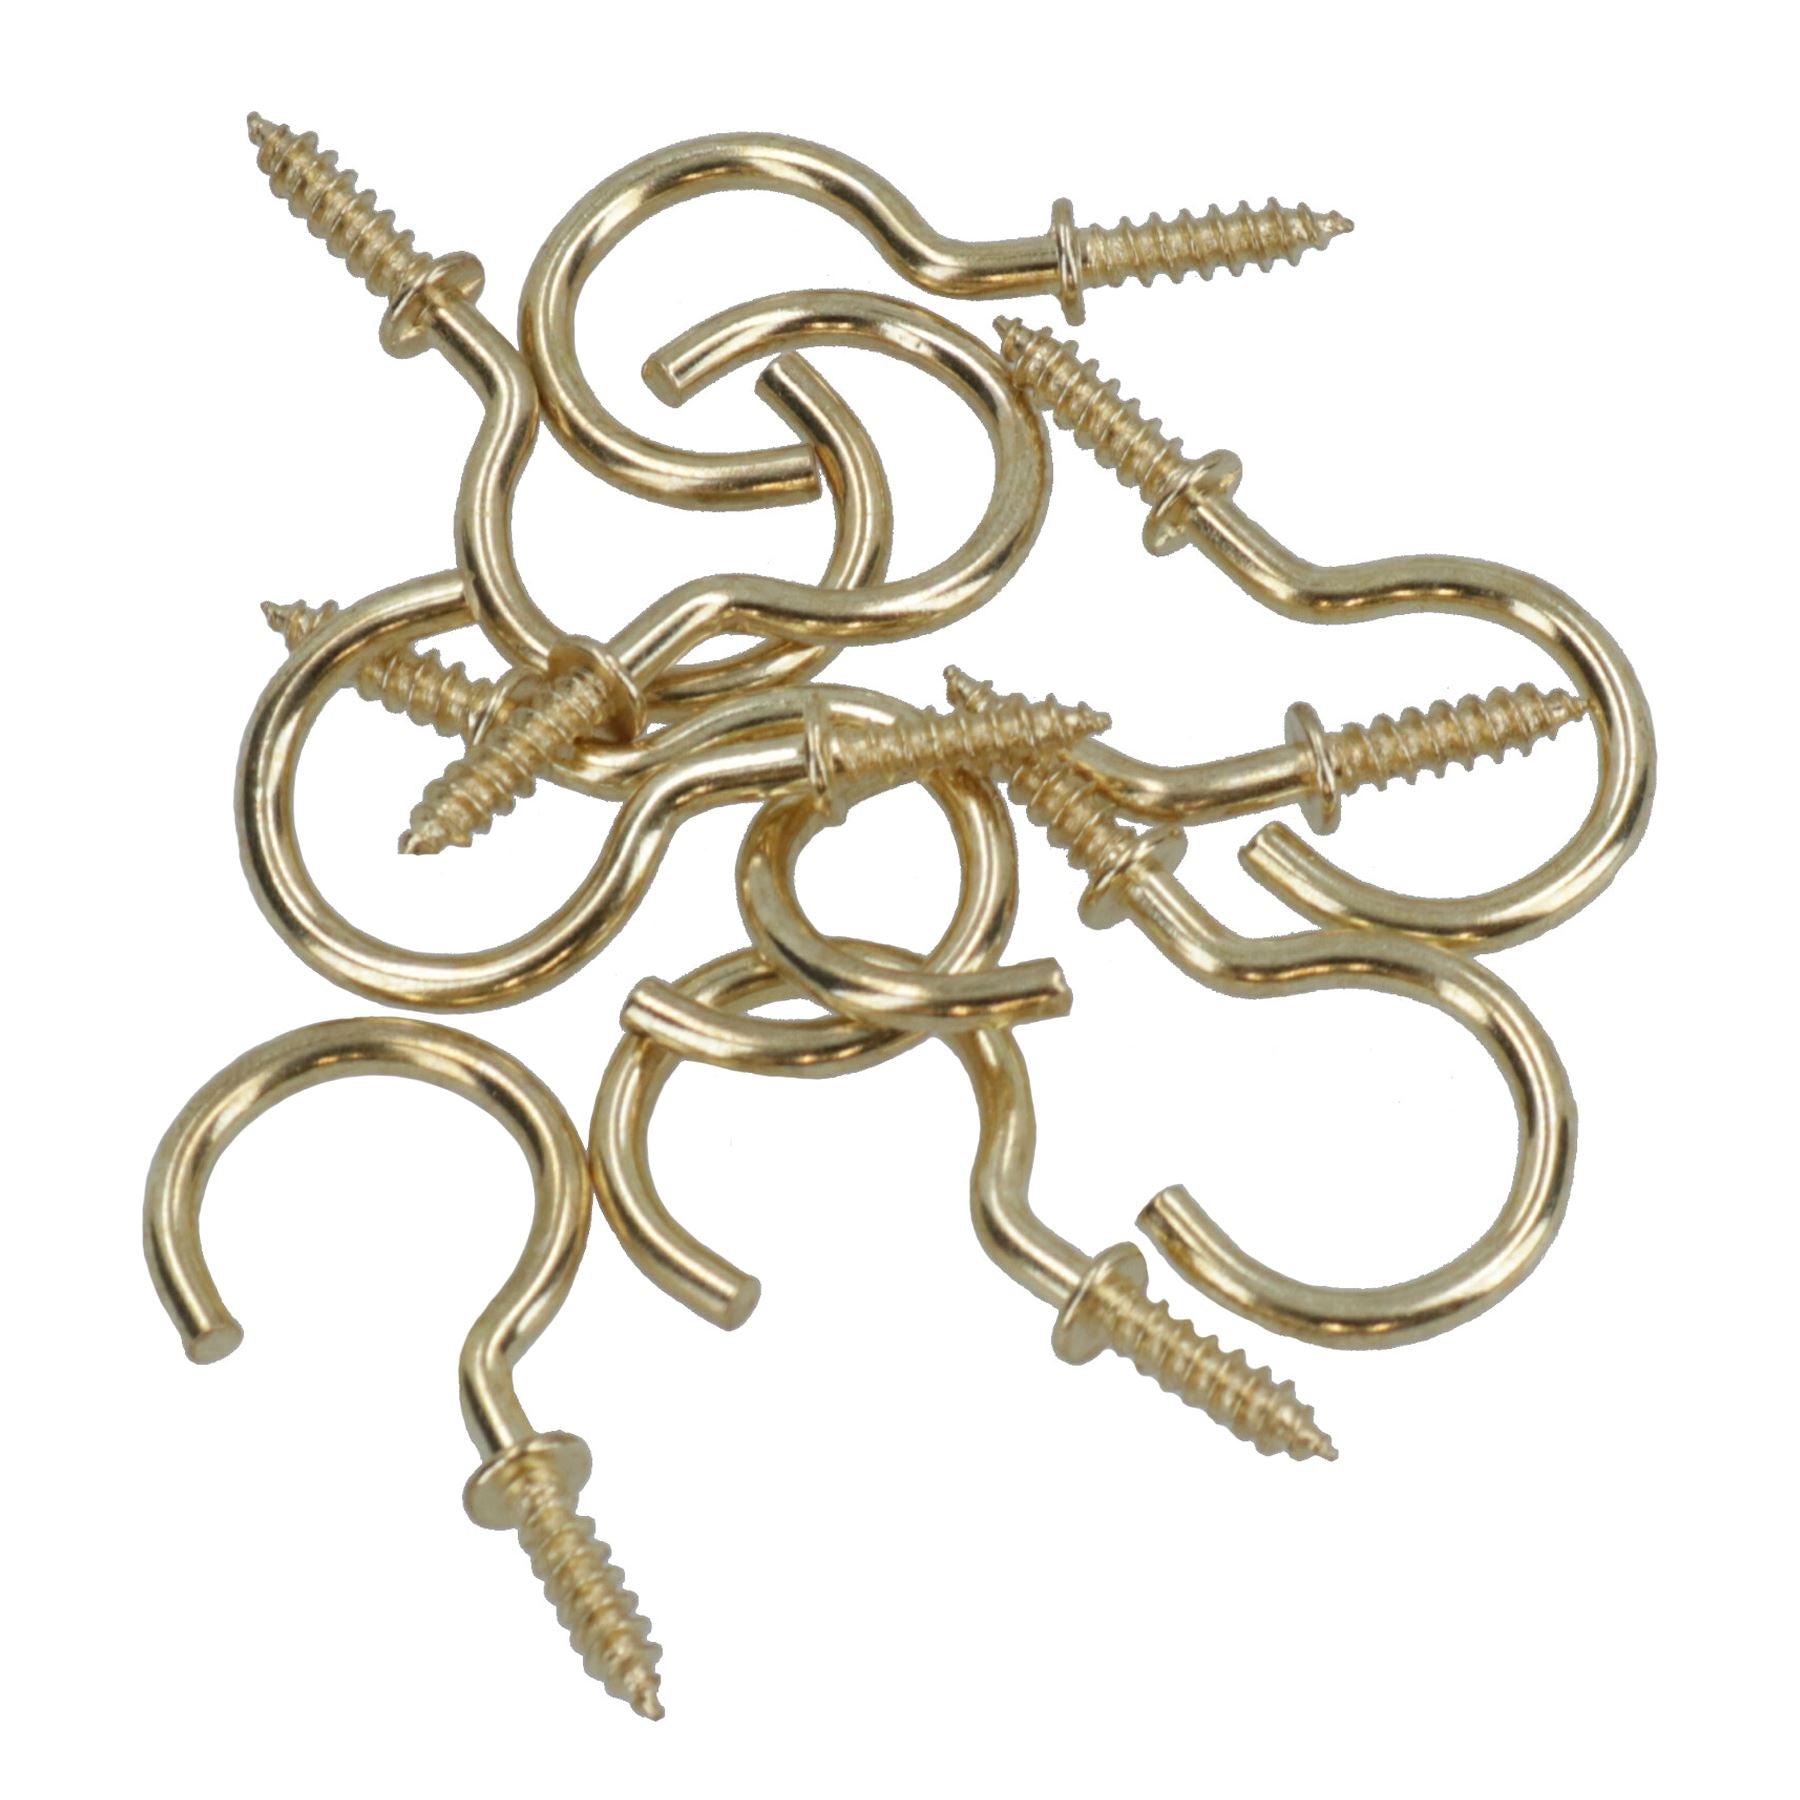 Shouldered Screw Hooks Fasteners Hanger Brass Plated 15mm Dia 25mm Length